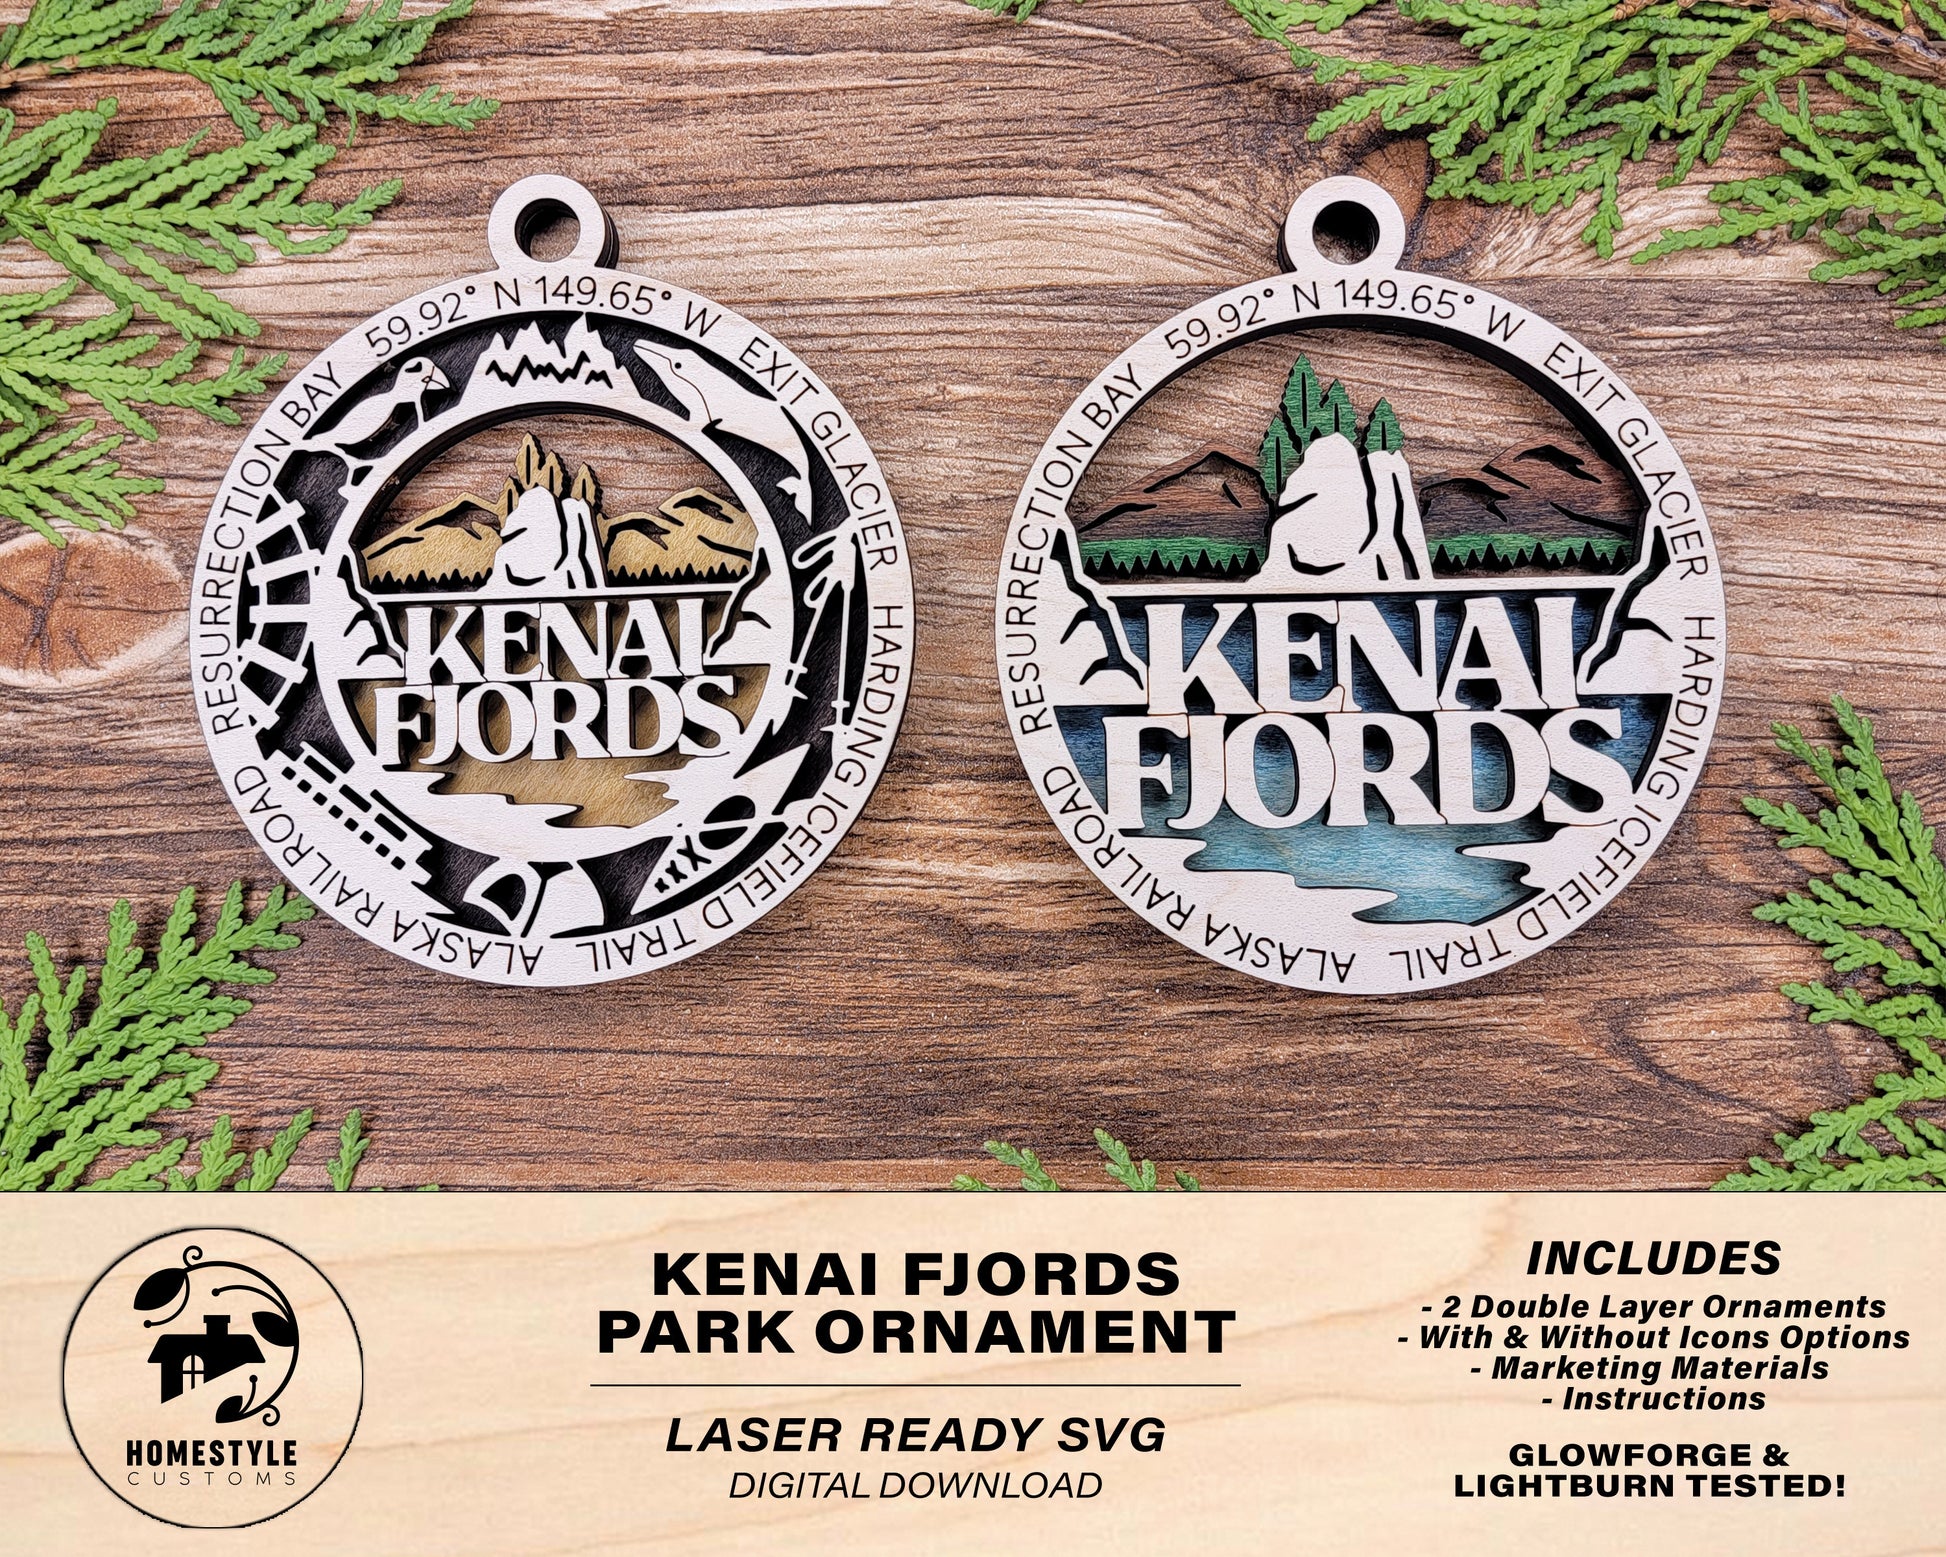 Kenai Fjords Park Ornament - Includes 2 Ornaments - Laser Design SVG, PDF, AI File Download - Tested On Glowforge and LightBurn